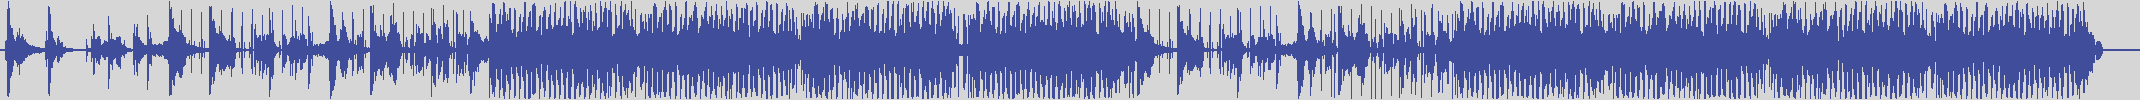 nf_boyz_records [NFY032] Modell, Mercier - Spicy Man [Jazz Cat Mix] audio wave form